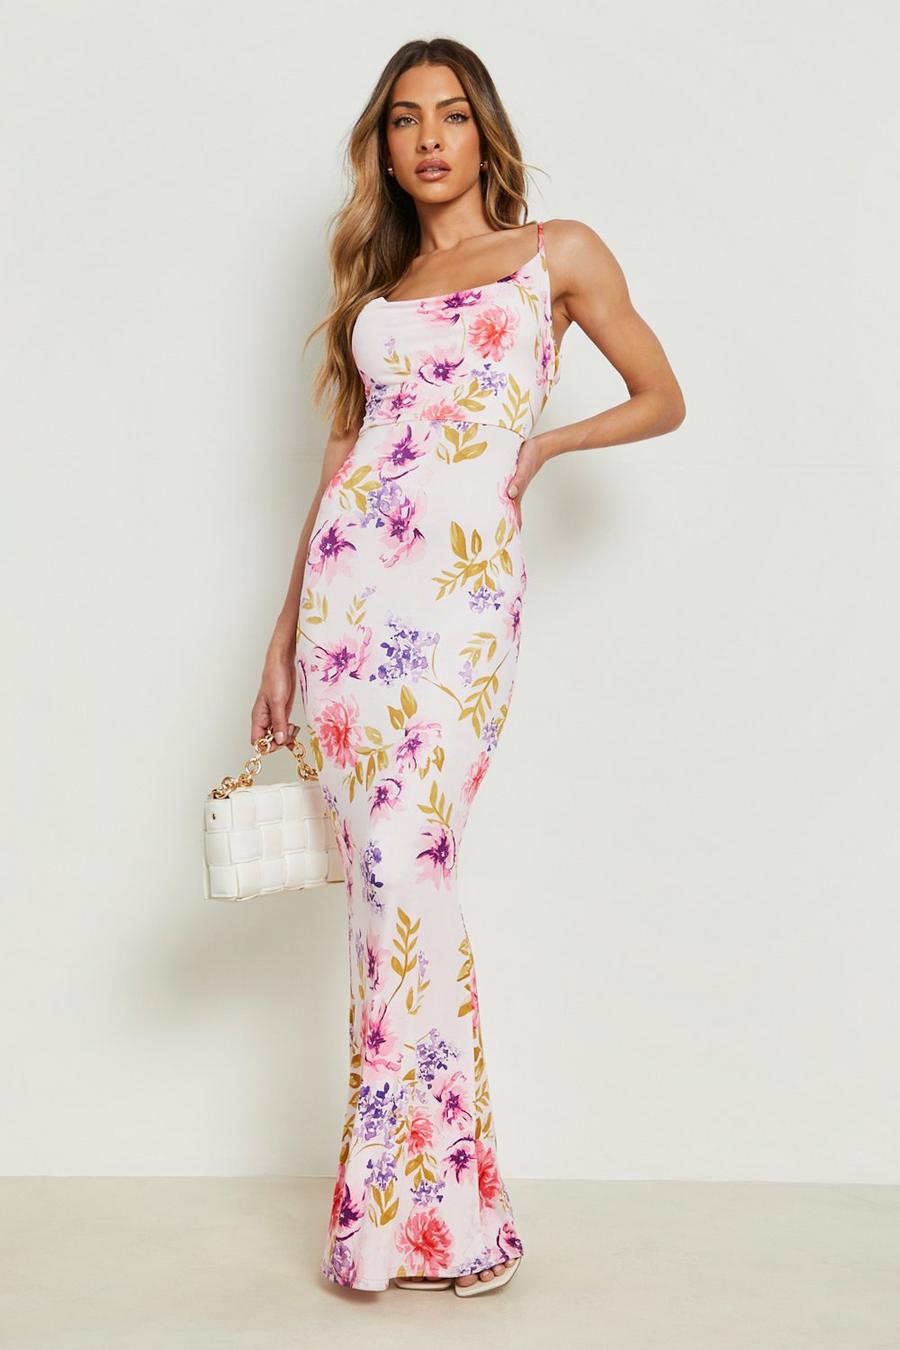 Blush Slinky Cowl Neck Maxi Dress Floral Print